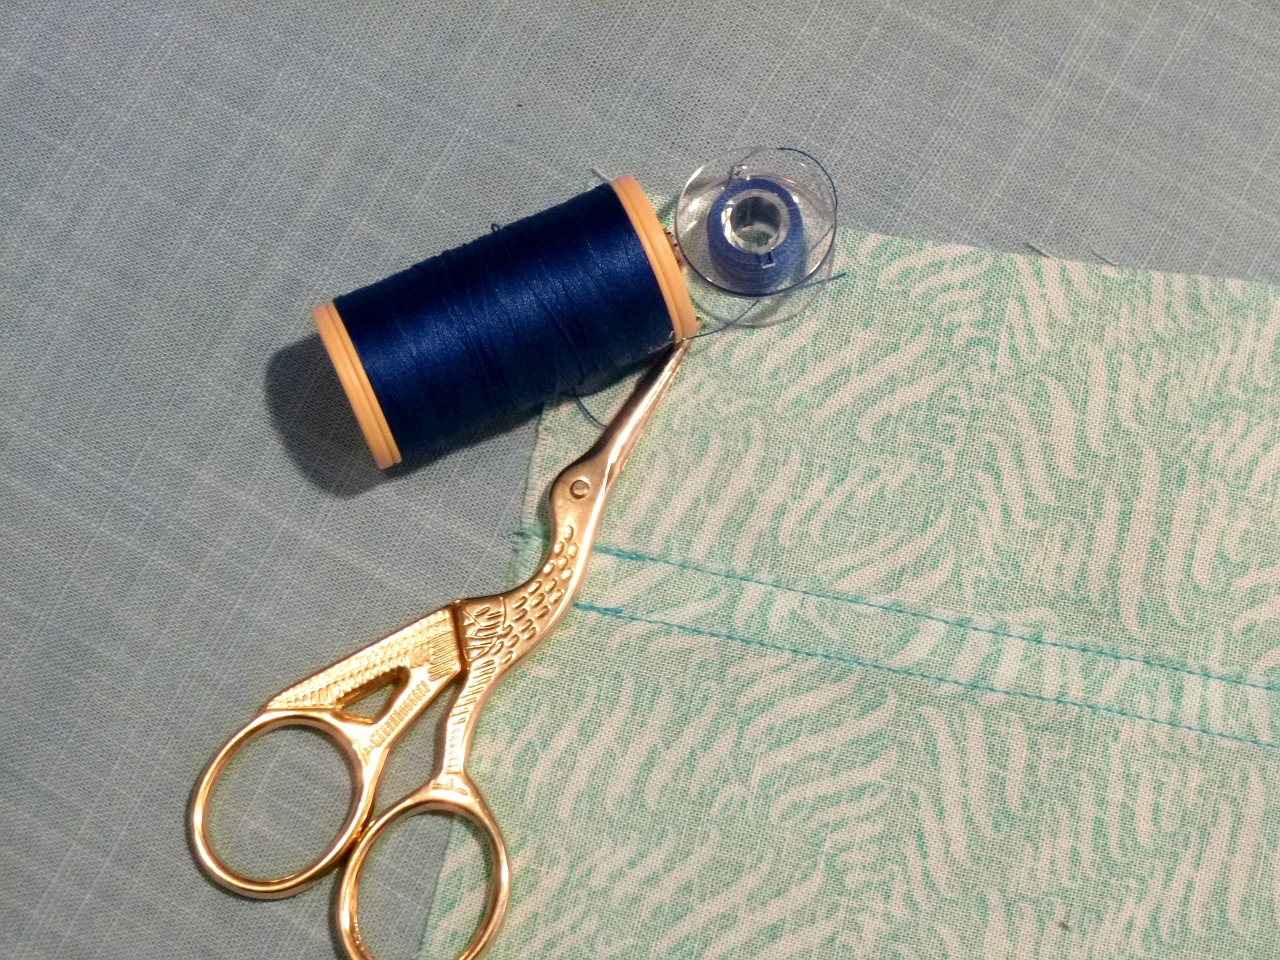 sew sewing thread free photo